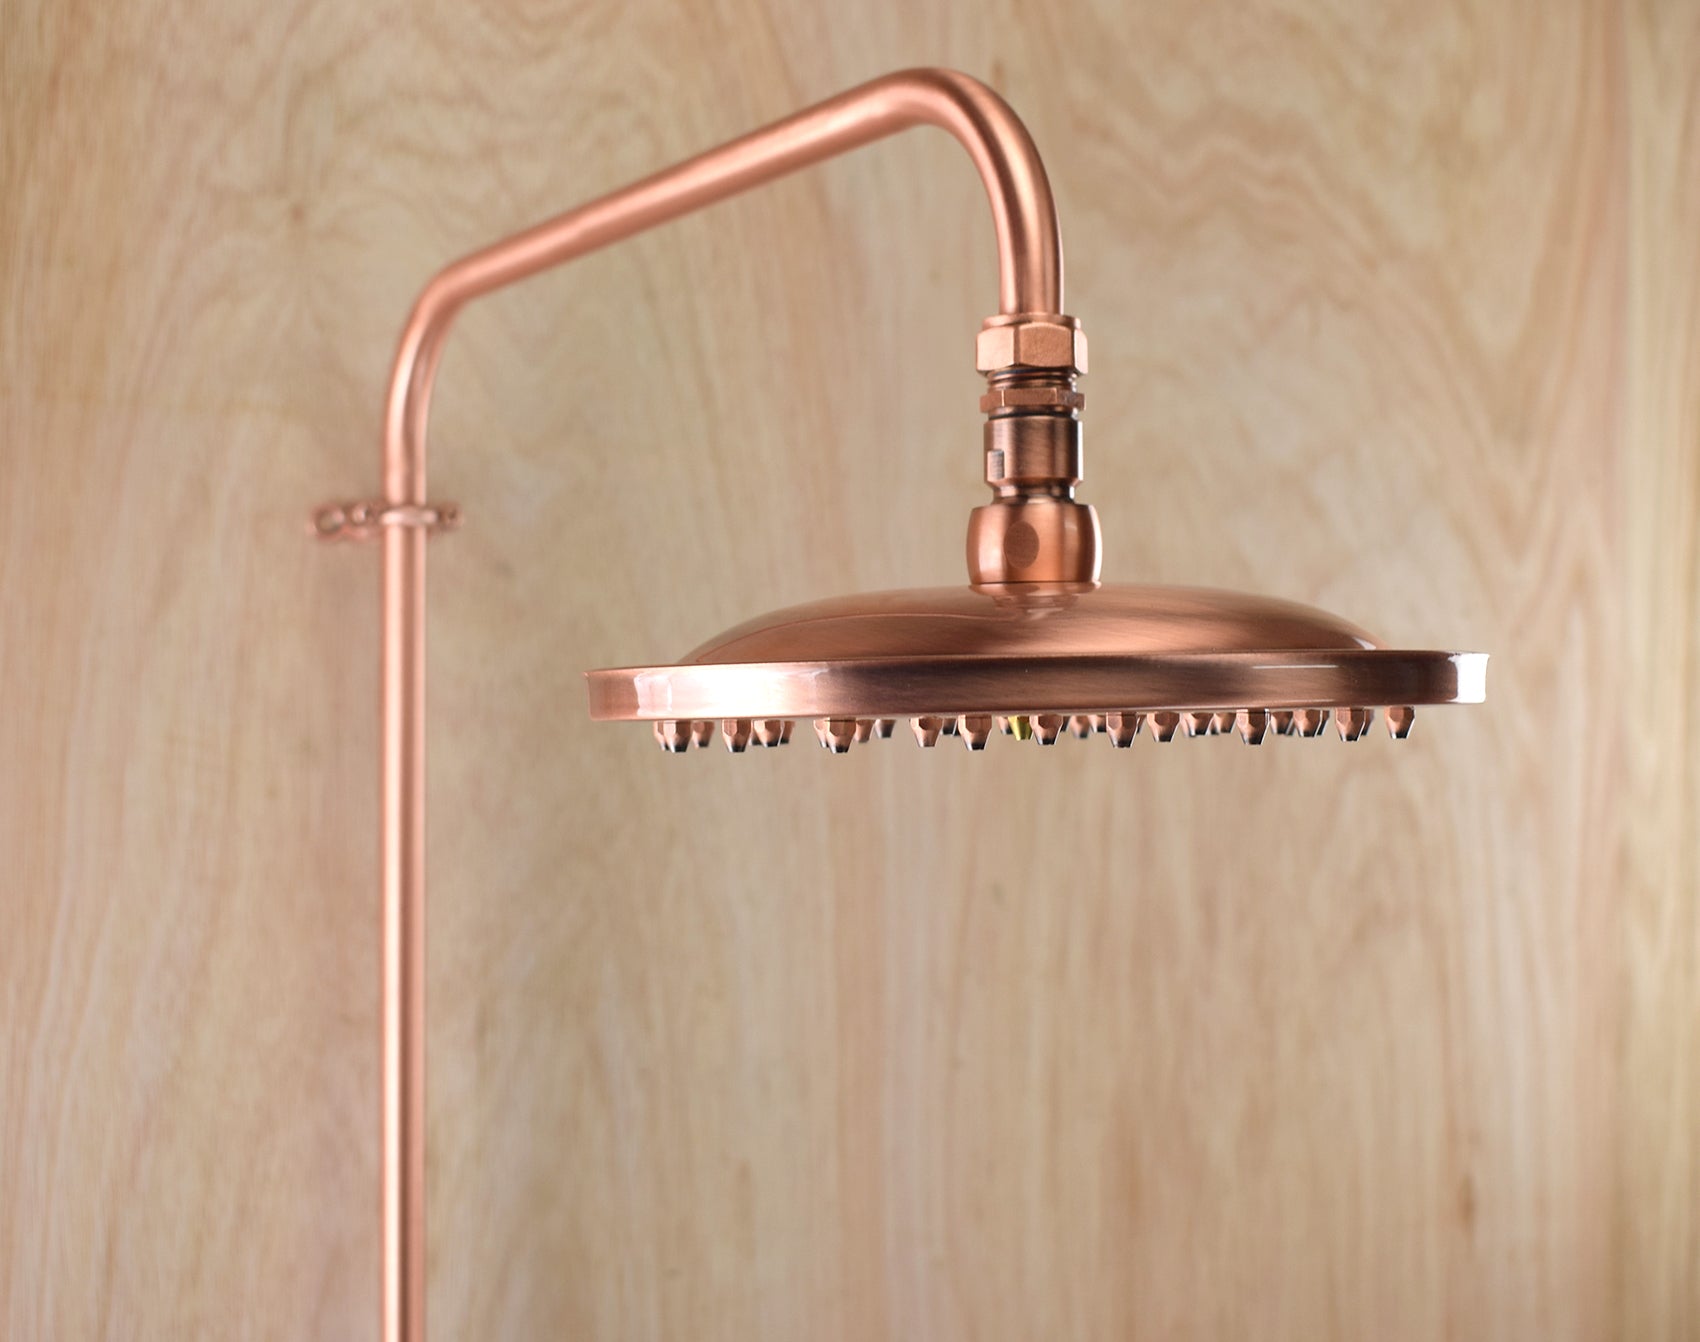 copper shower head sold at proper copper design